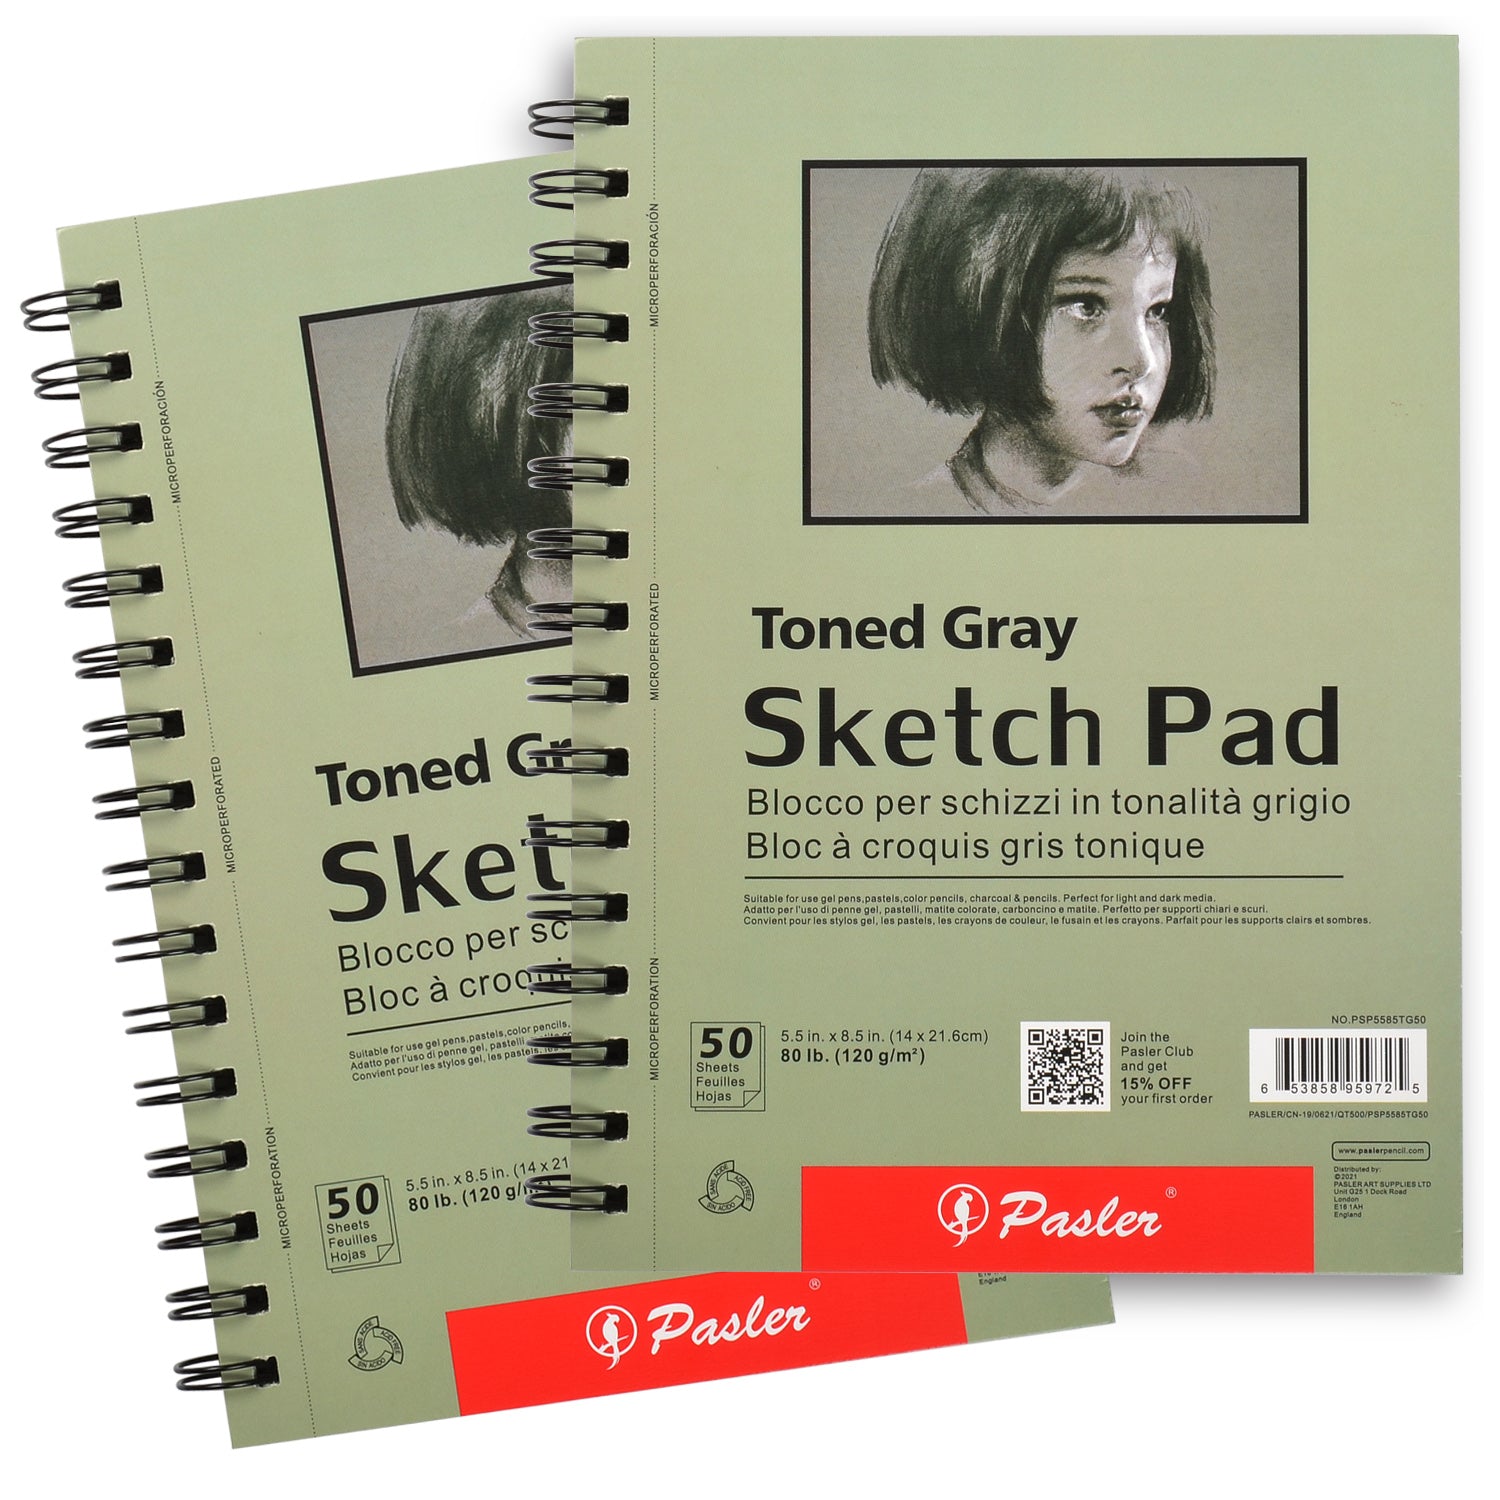 Strathmore Sketchbook 9x12 50 Sheets Toned Tan 2 pack